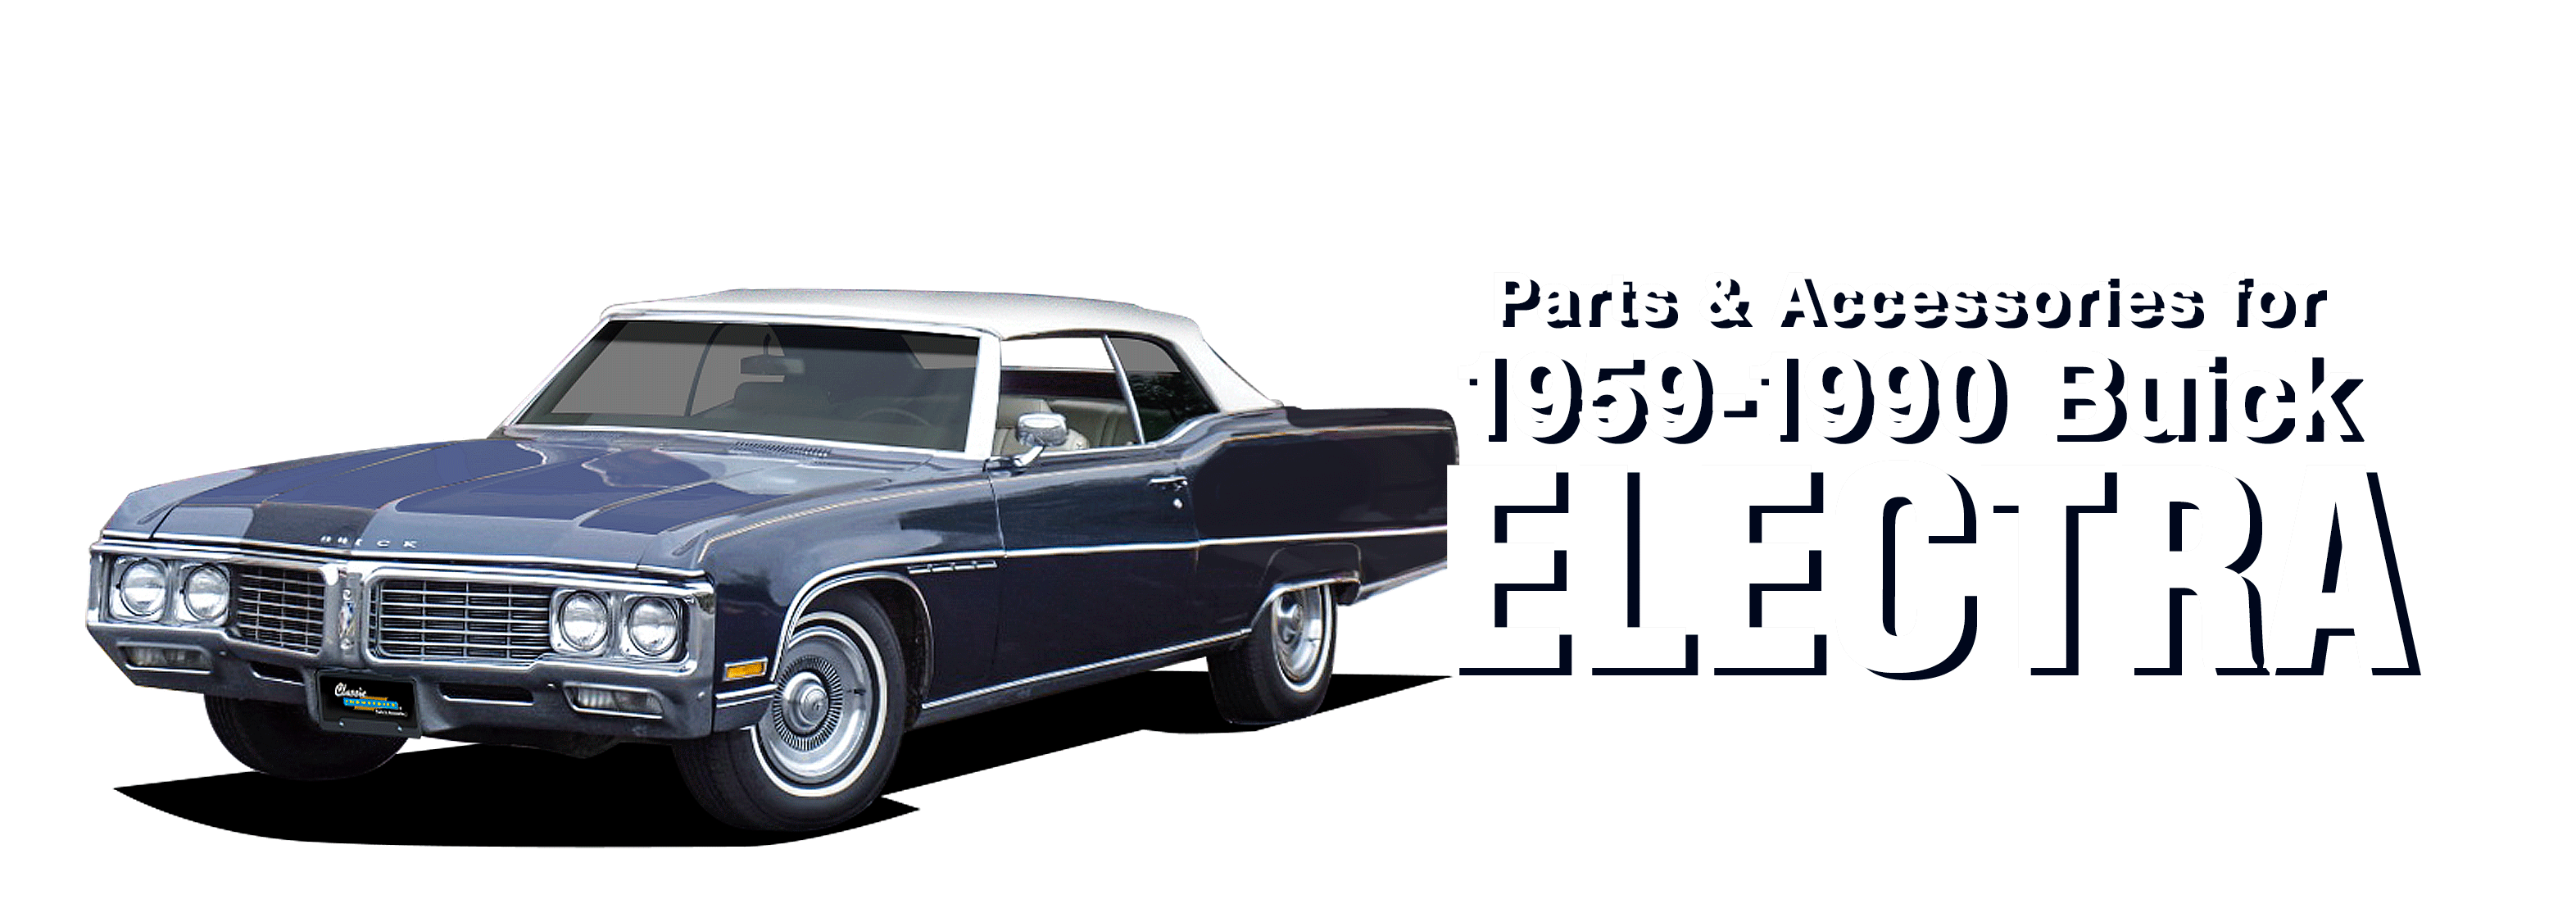 Buick-Electra-vehicle-desktop